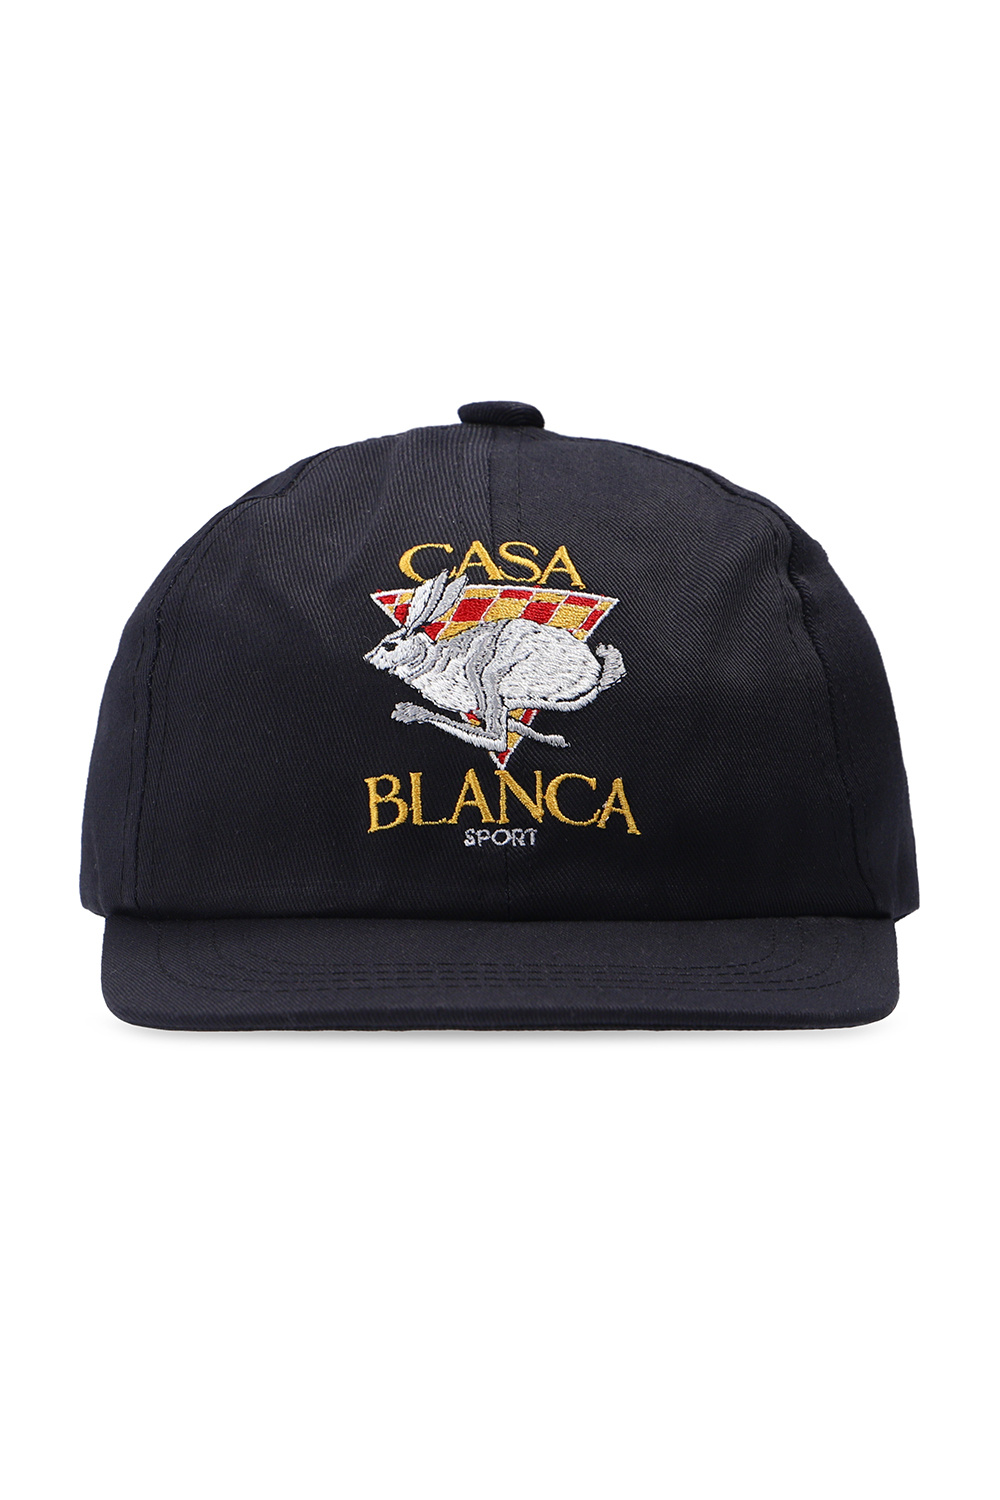 Casablanca Men's Sportswear Classic 99 Classic Trucker Snapback Hat